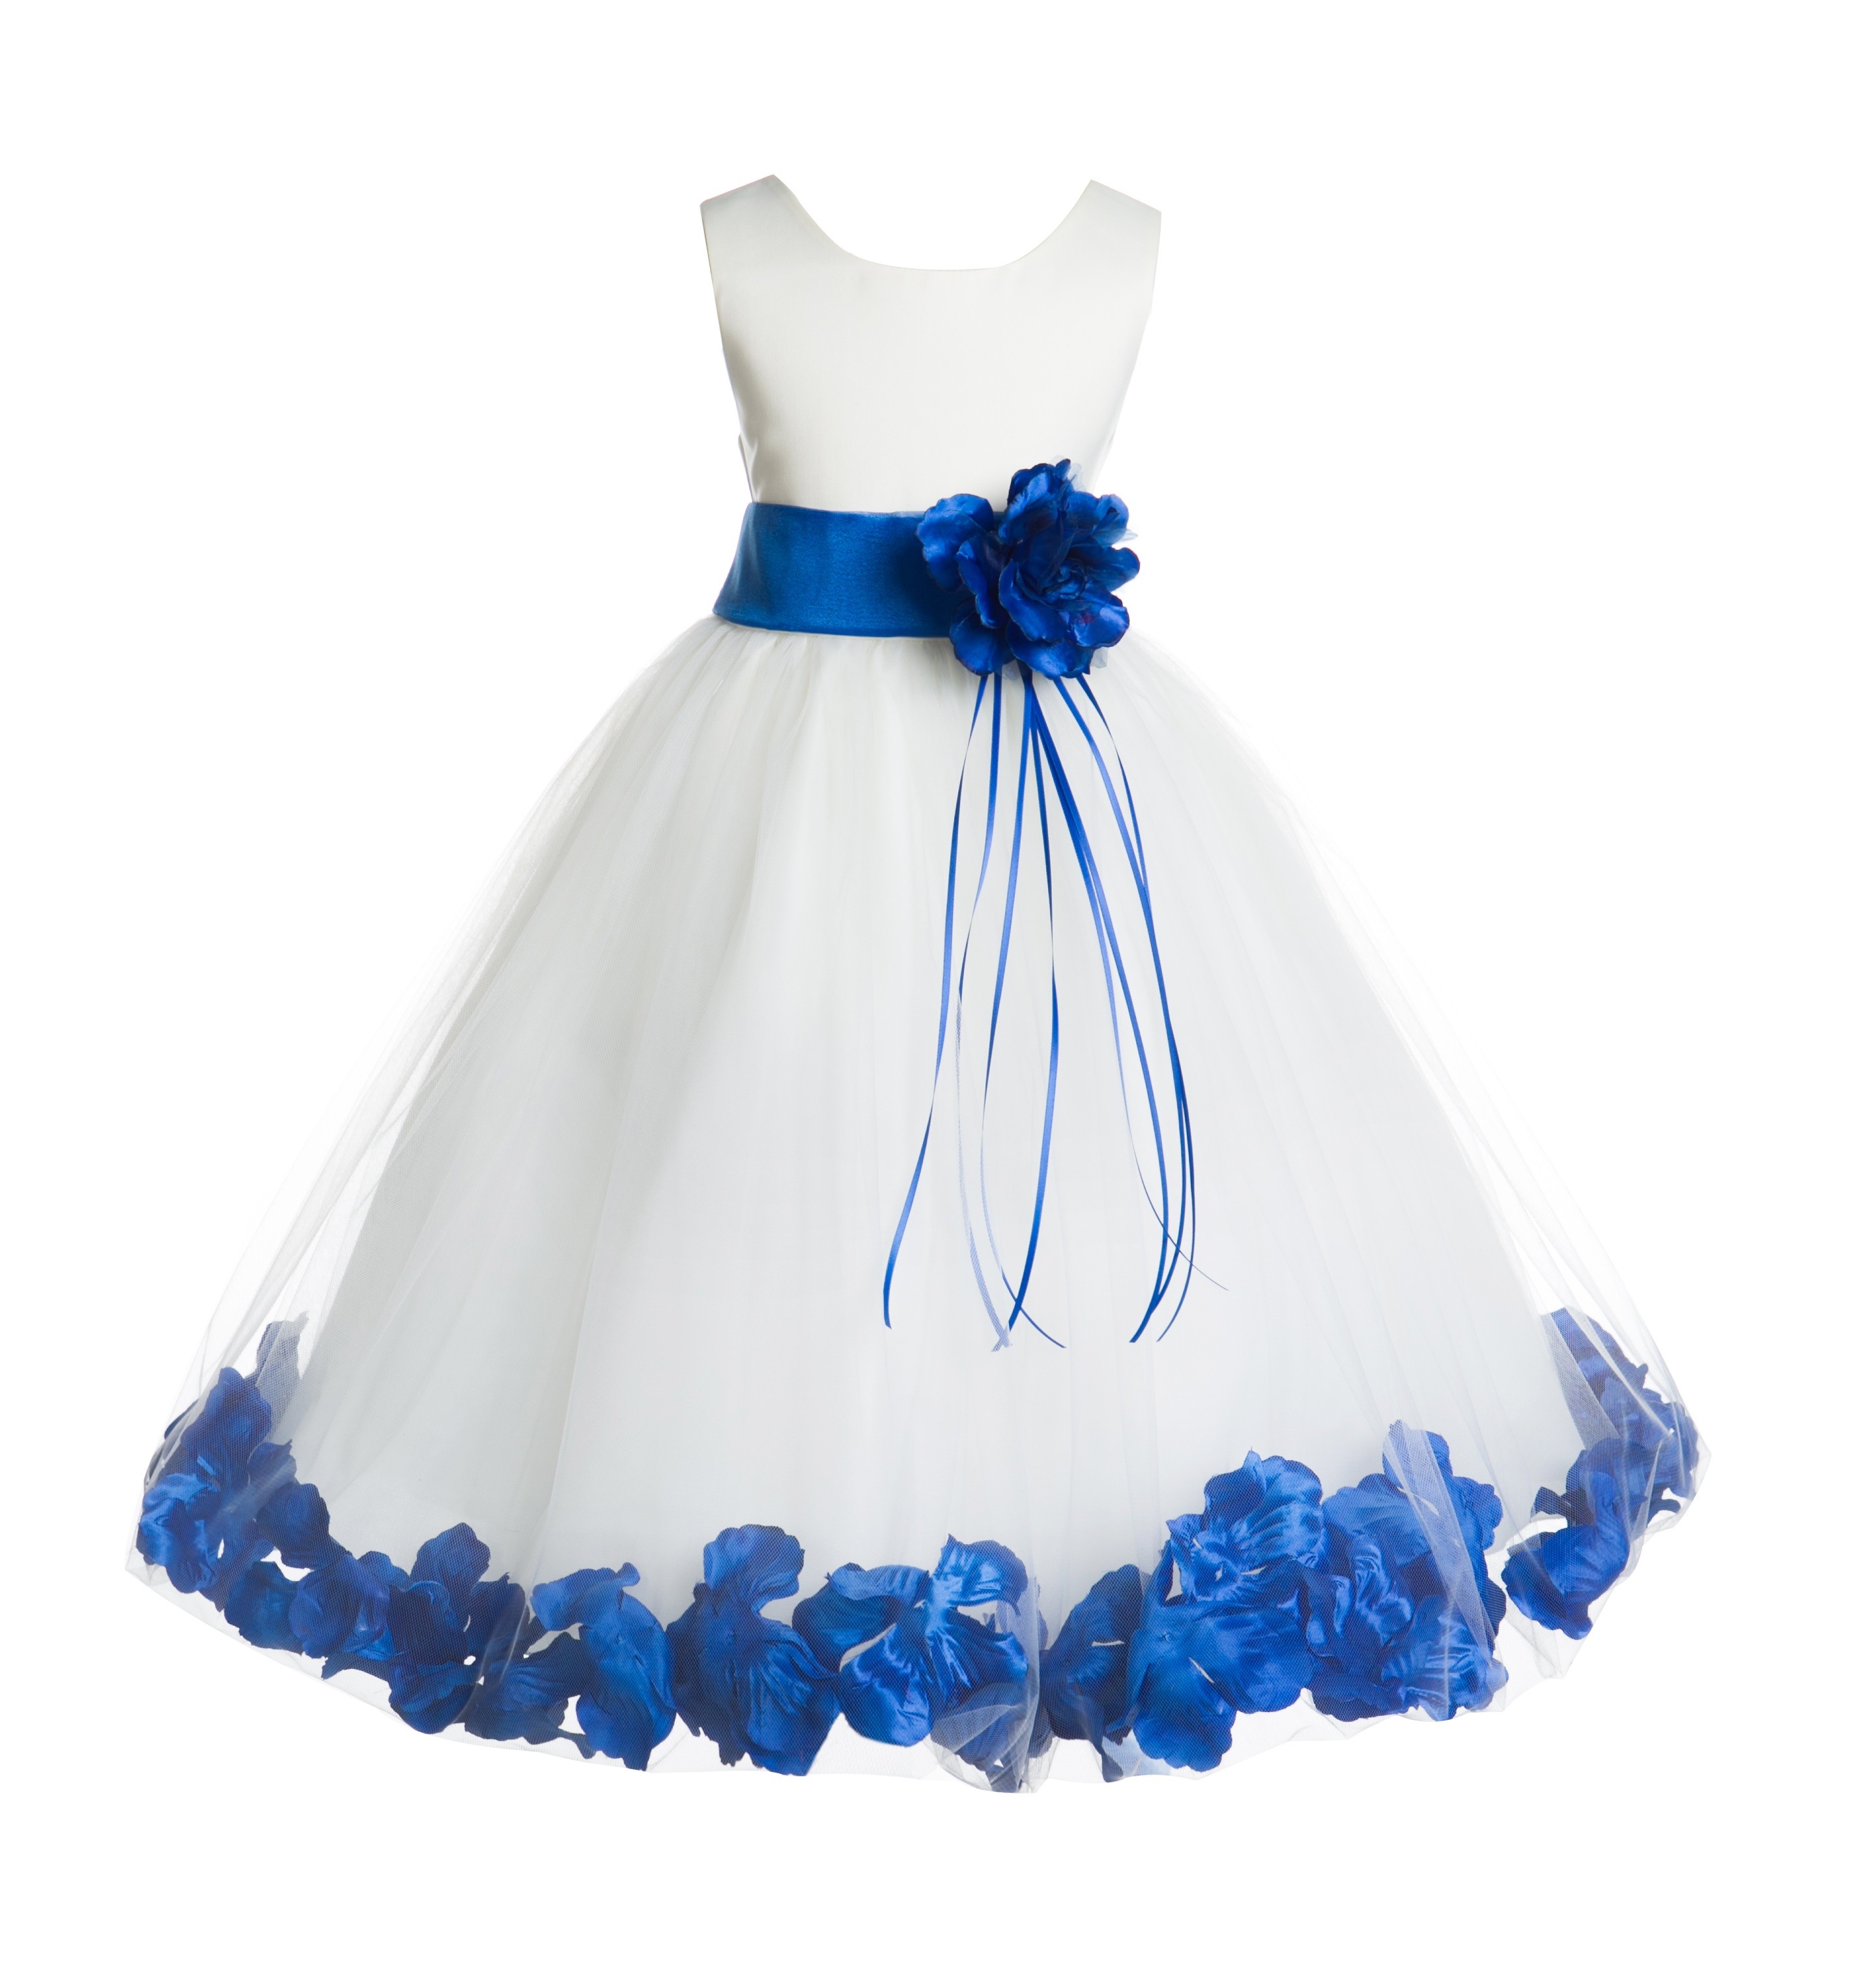 ekidsbridal Ivory Tulle Floral Rose Petals Junior Flower Girl Dresses Pageant Special Occasions 007 Size 6-9m 12-18m 2 4 6 8 10 12 14 16